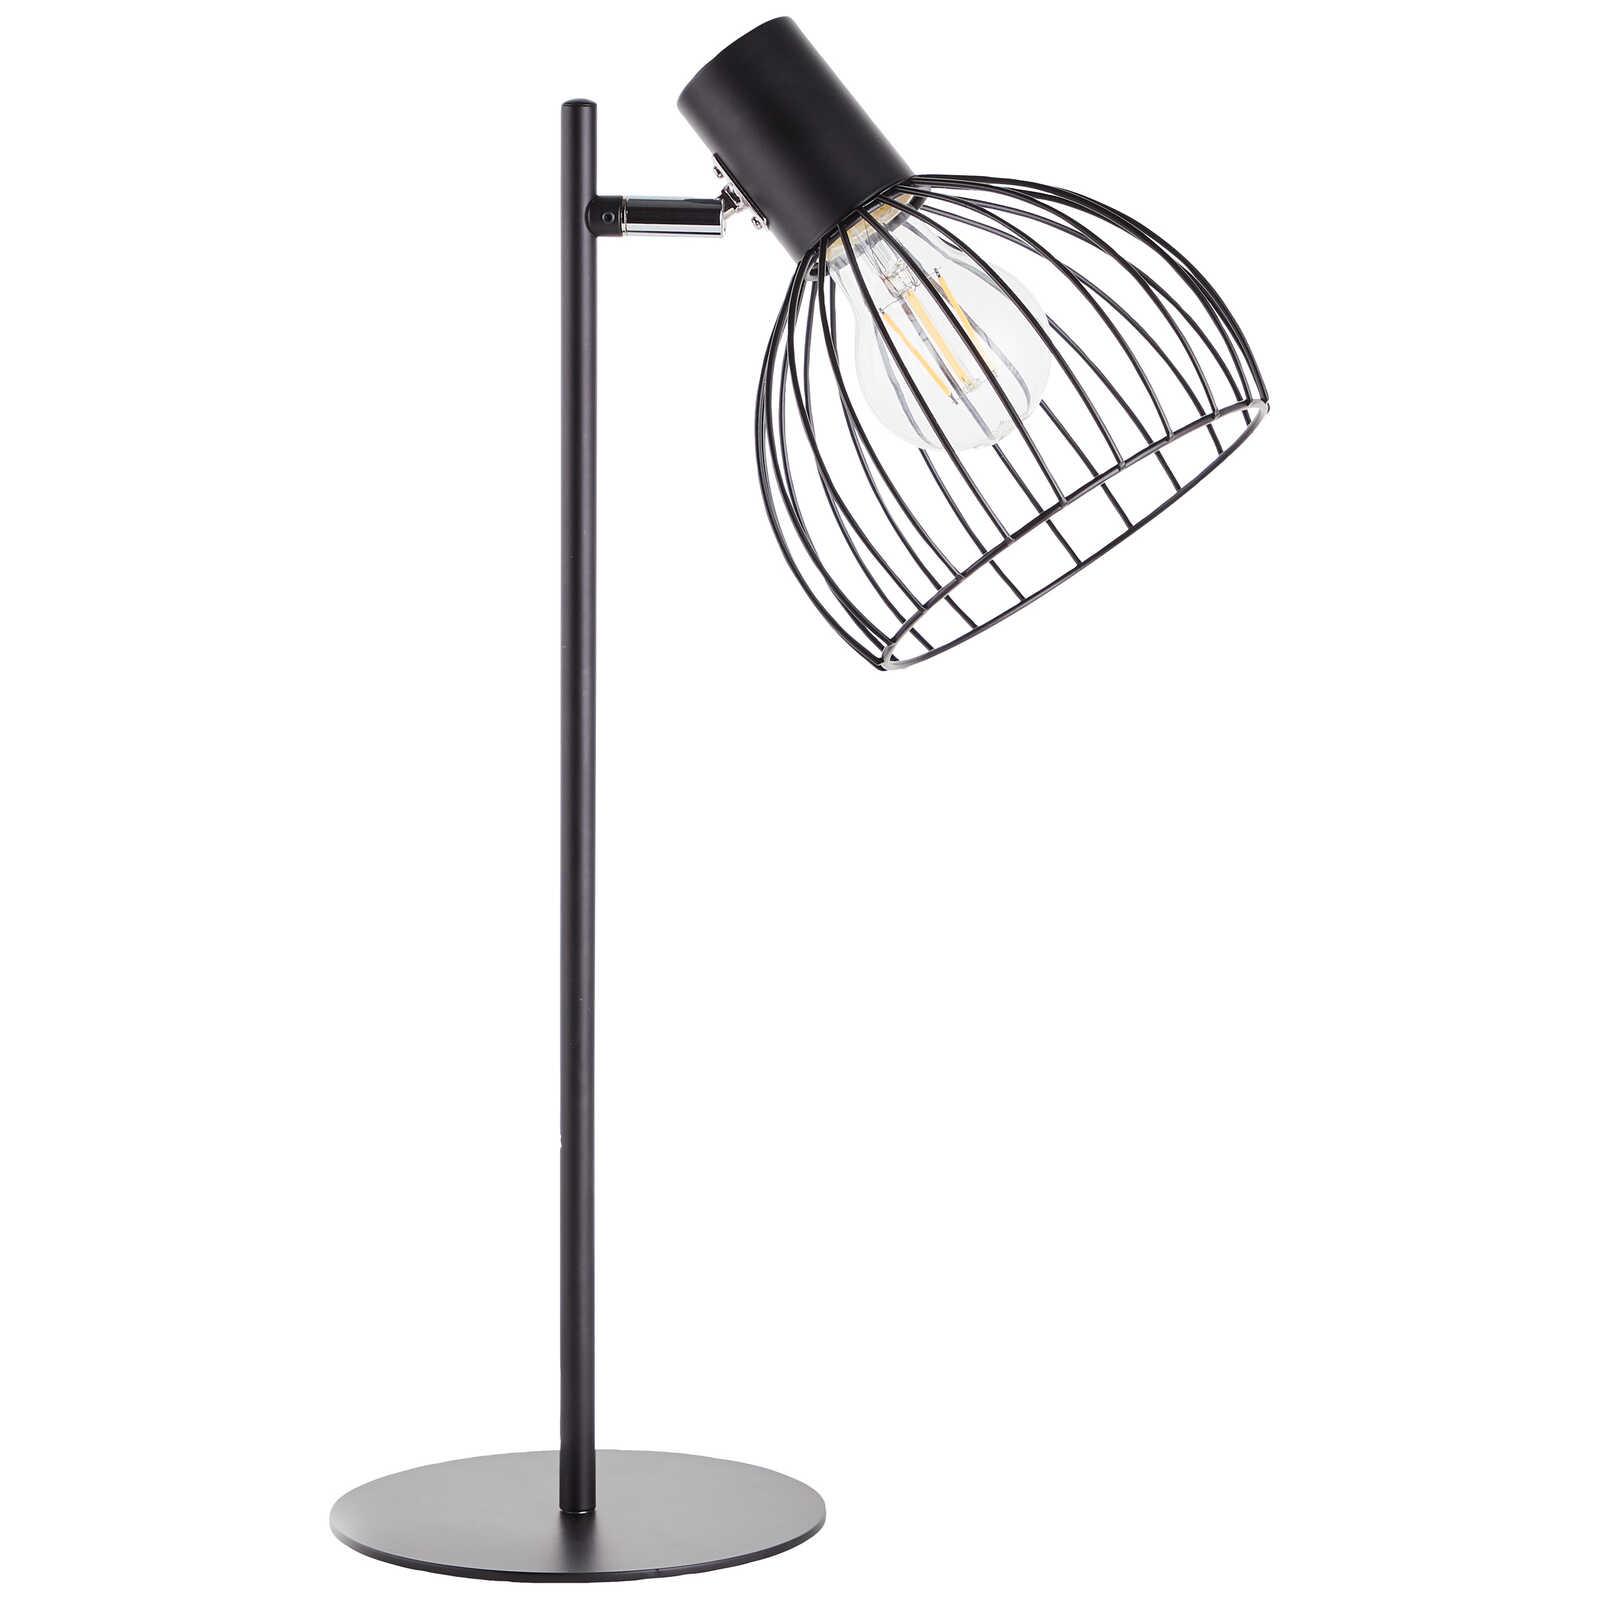             Metalen tafellamp - Bruno 1 - Zwart
        